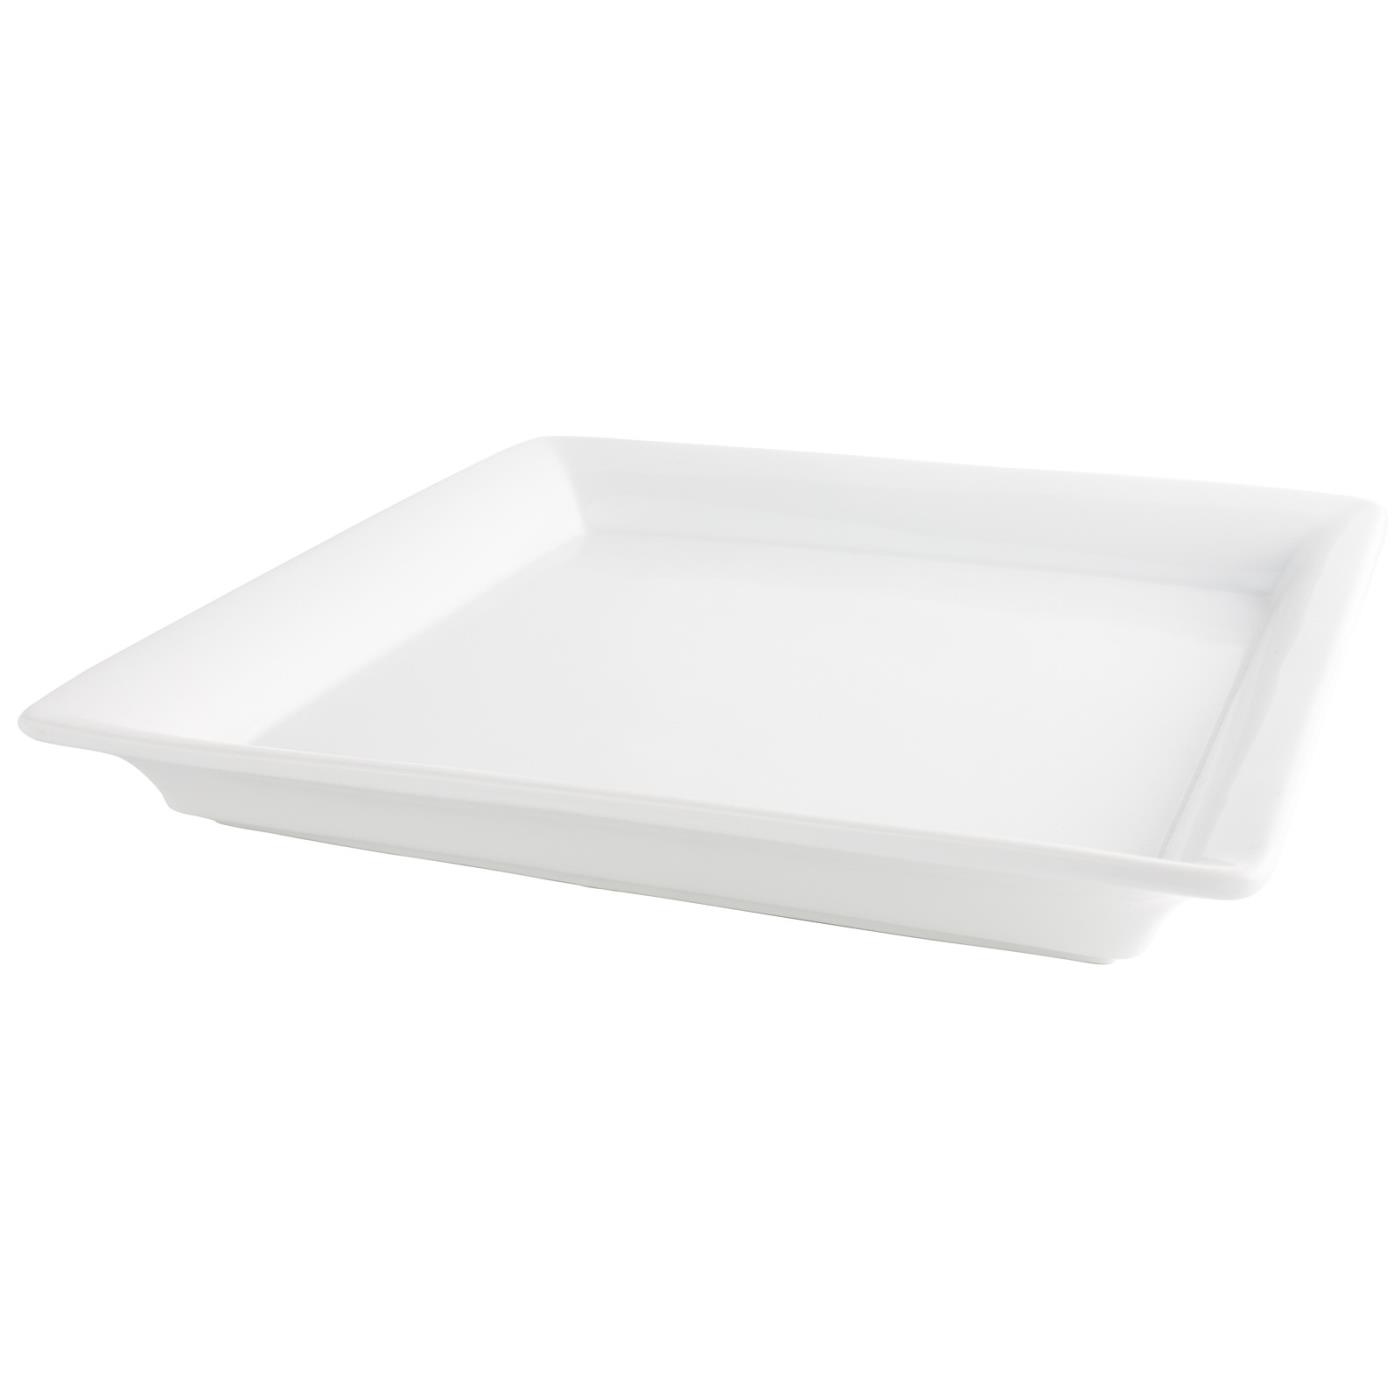 White Ceramic Square Platter - 18"